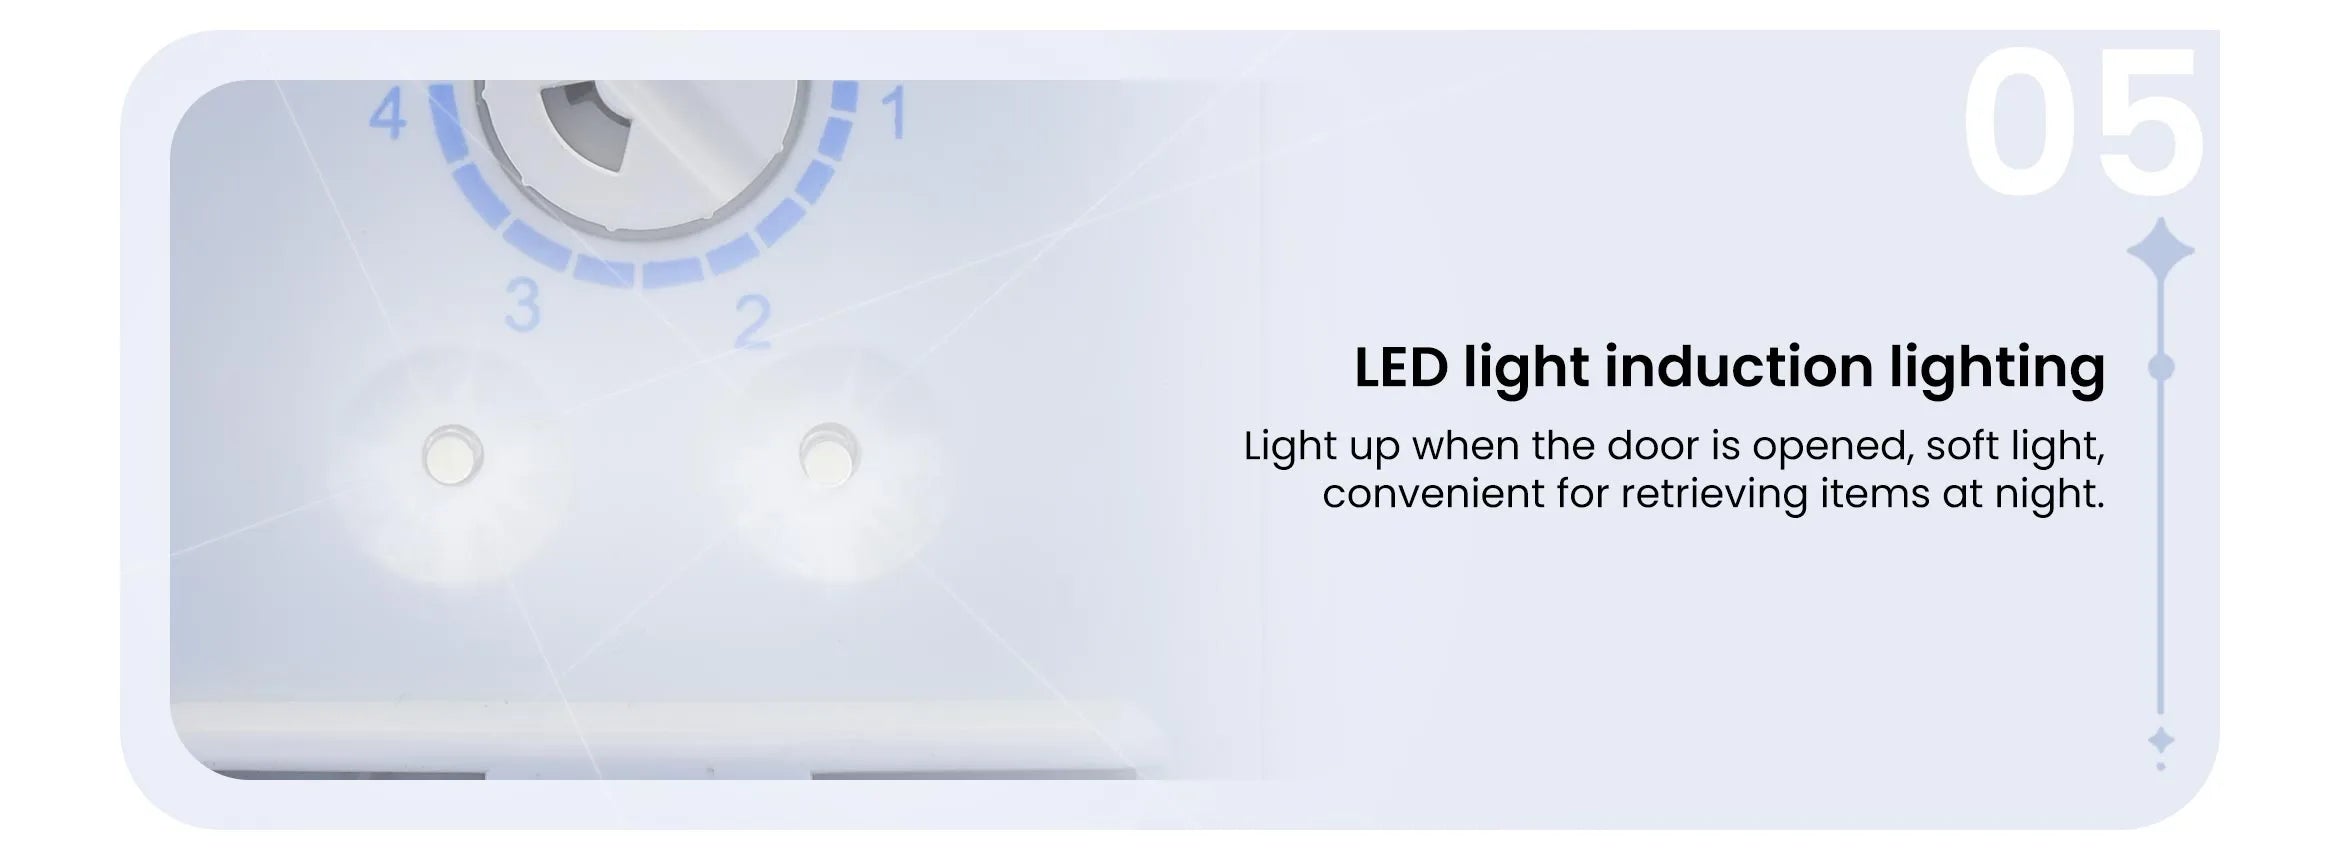 DSG-60L LED light induction lighting